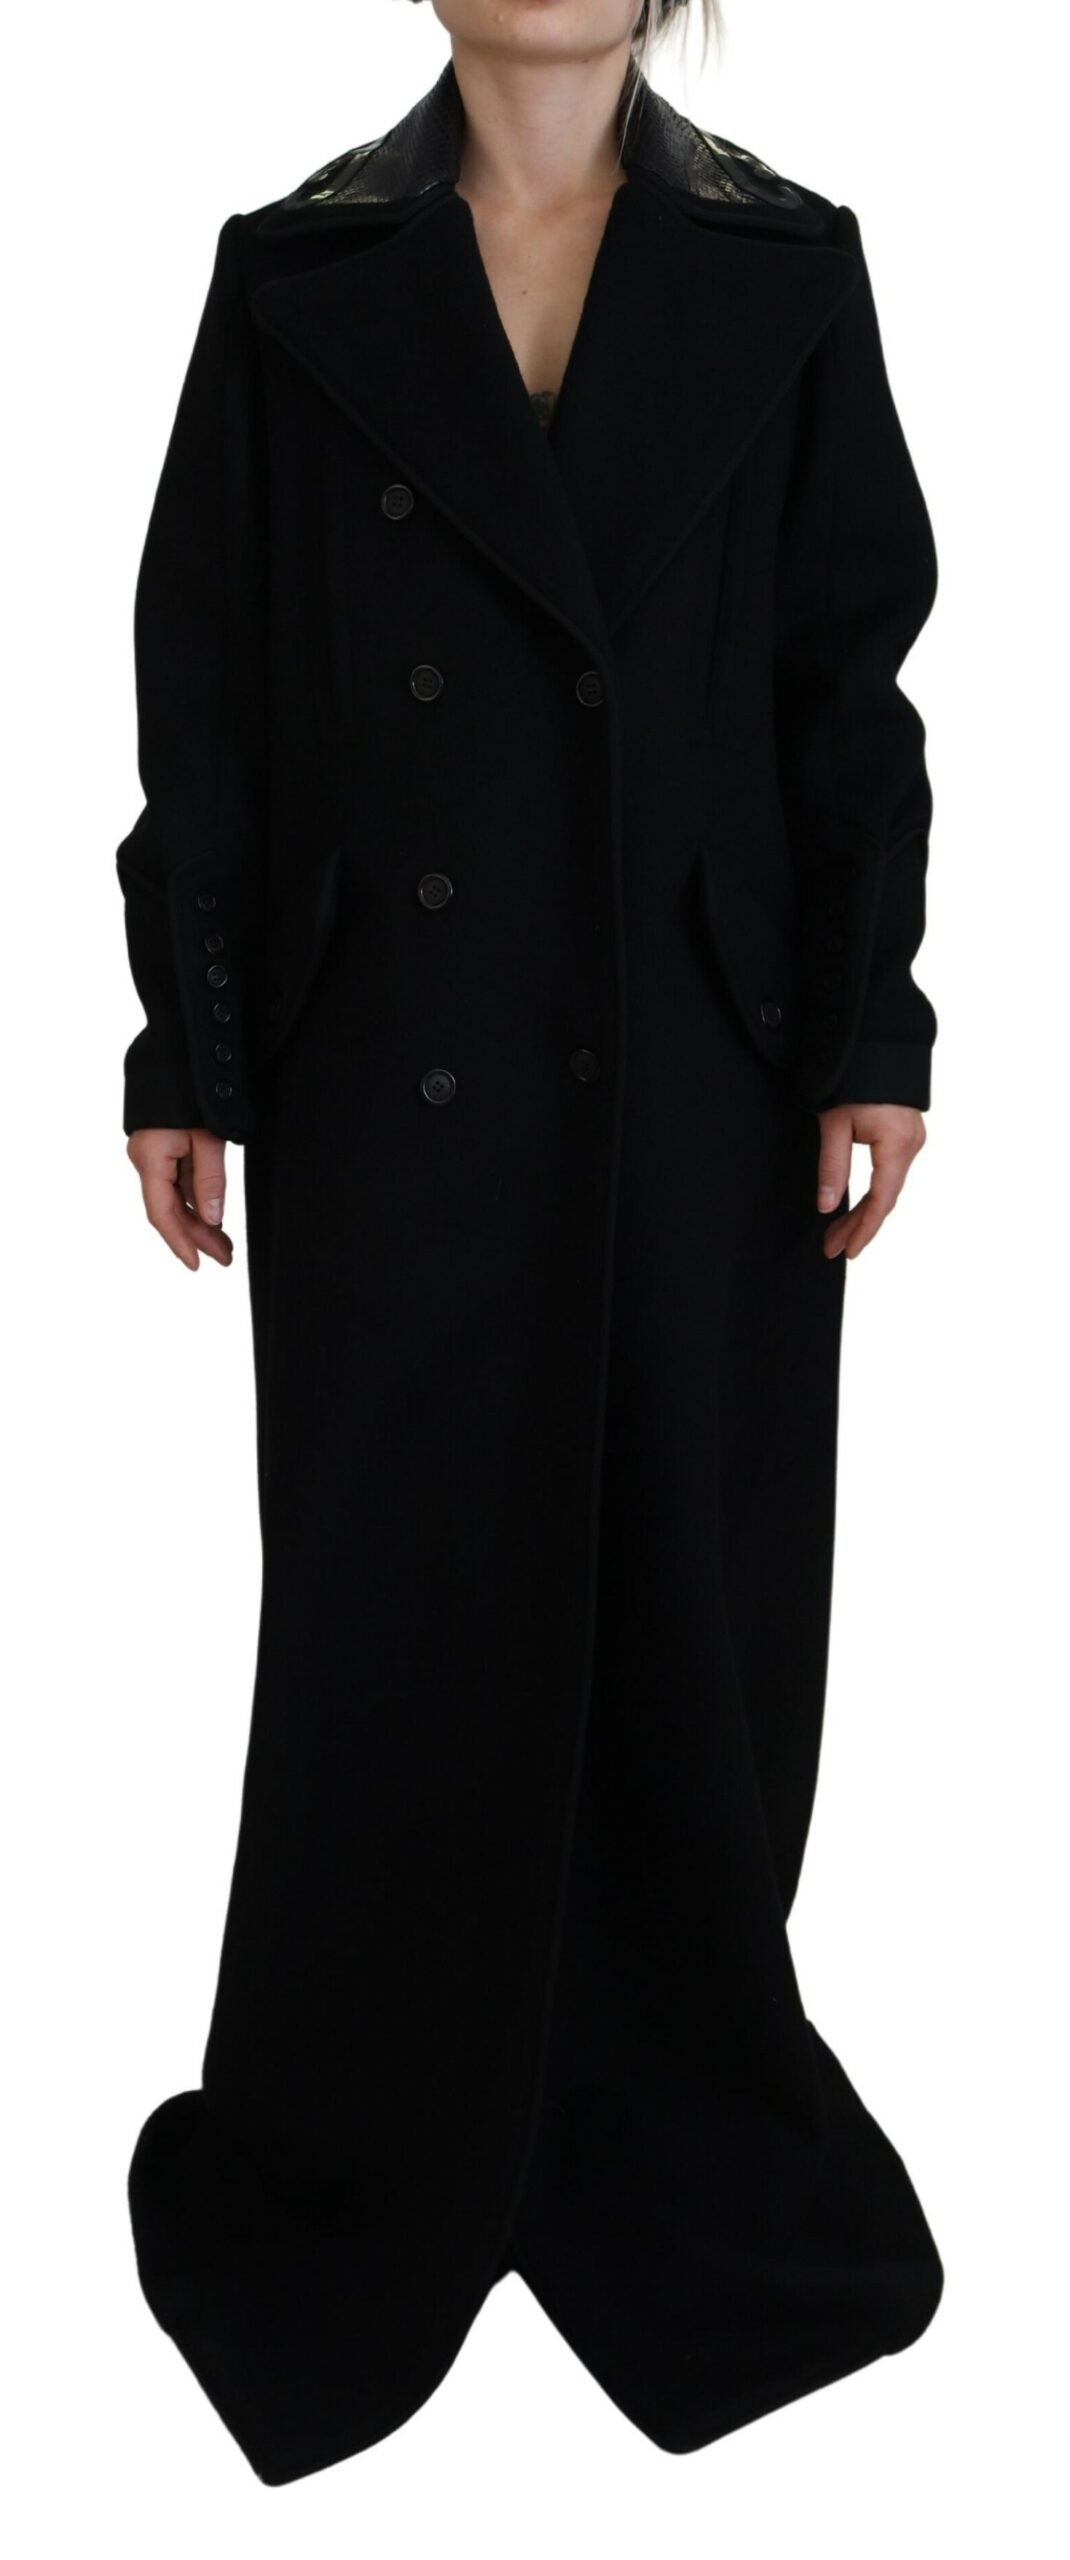 Black Double Breasted Long Coat Jacket